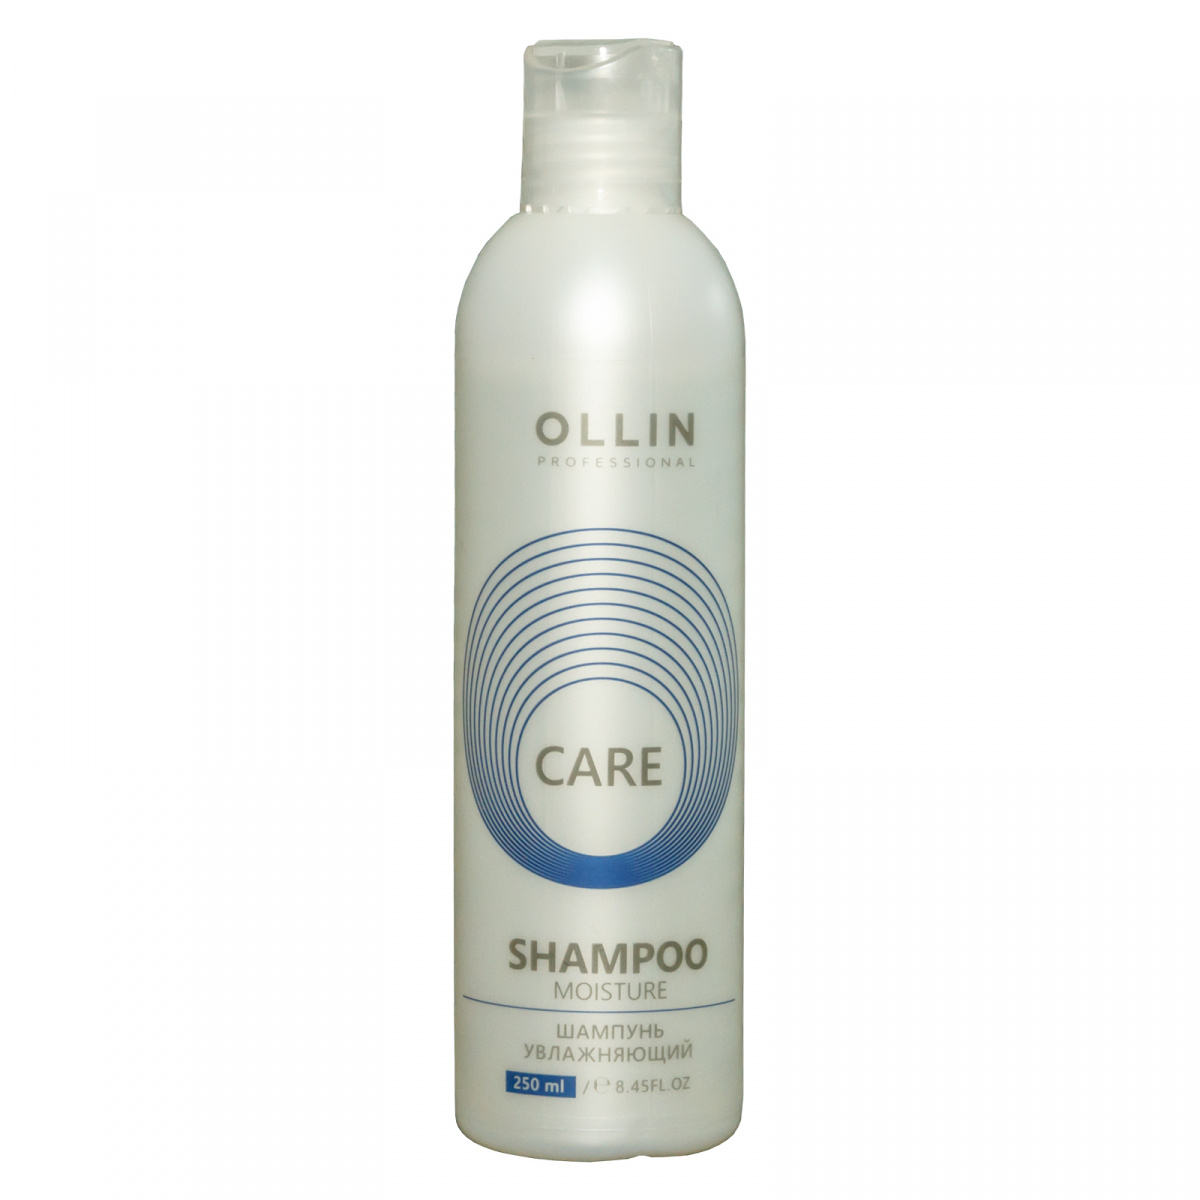 Ollin Professional Care Moisture Shampoo - Шампунь увлажняющий 250 мл Ollin Professional (Россия) купить по цене 286 руб.